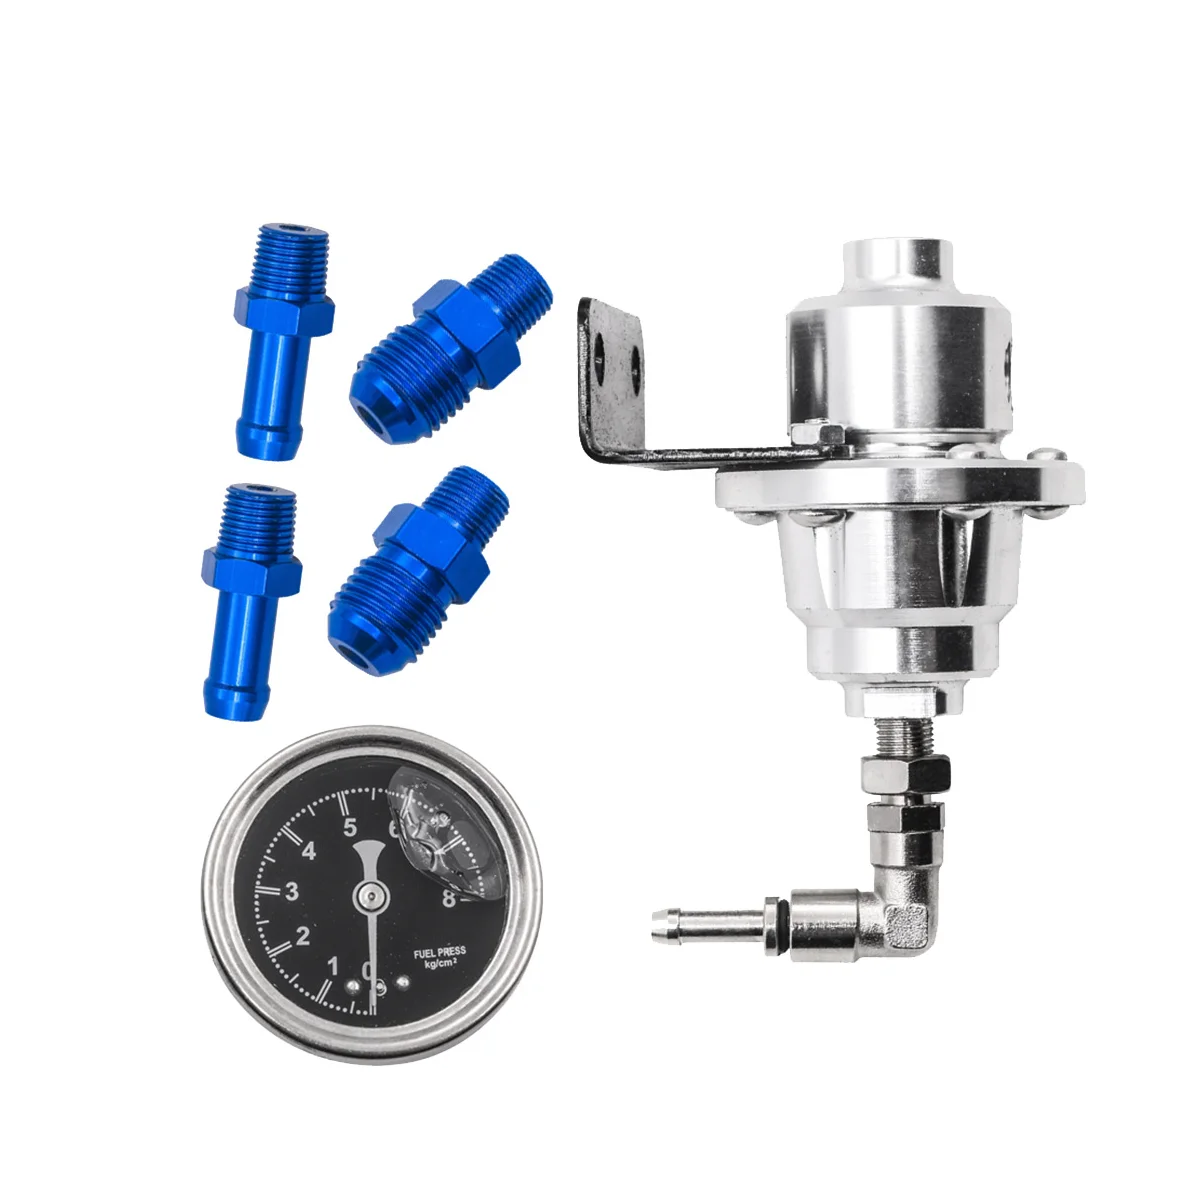 

Adjustable Fuel Regulator Fuel Booster Universal Pressure Regulator with Pressure Gauge Car Accessories,Silver